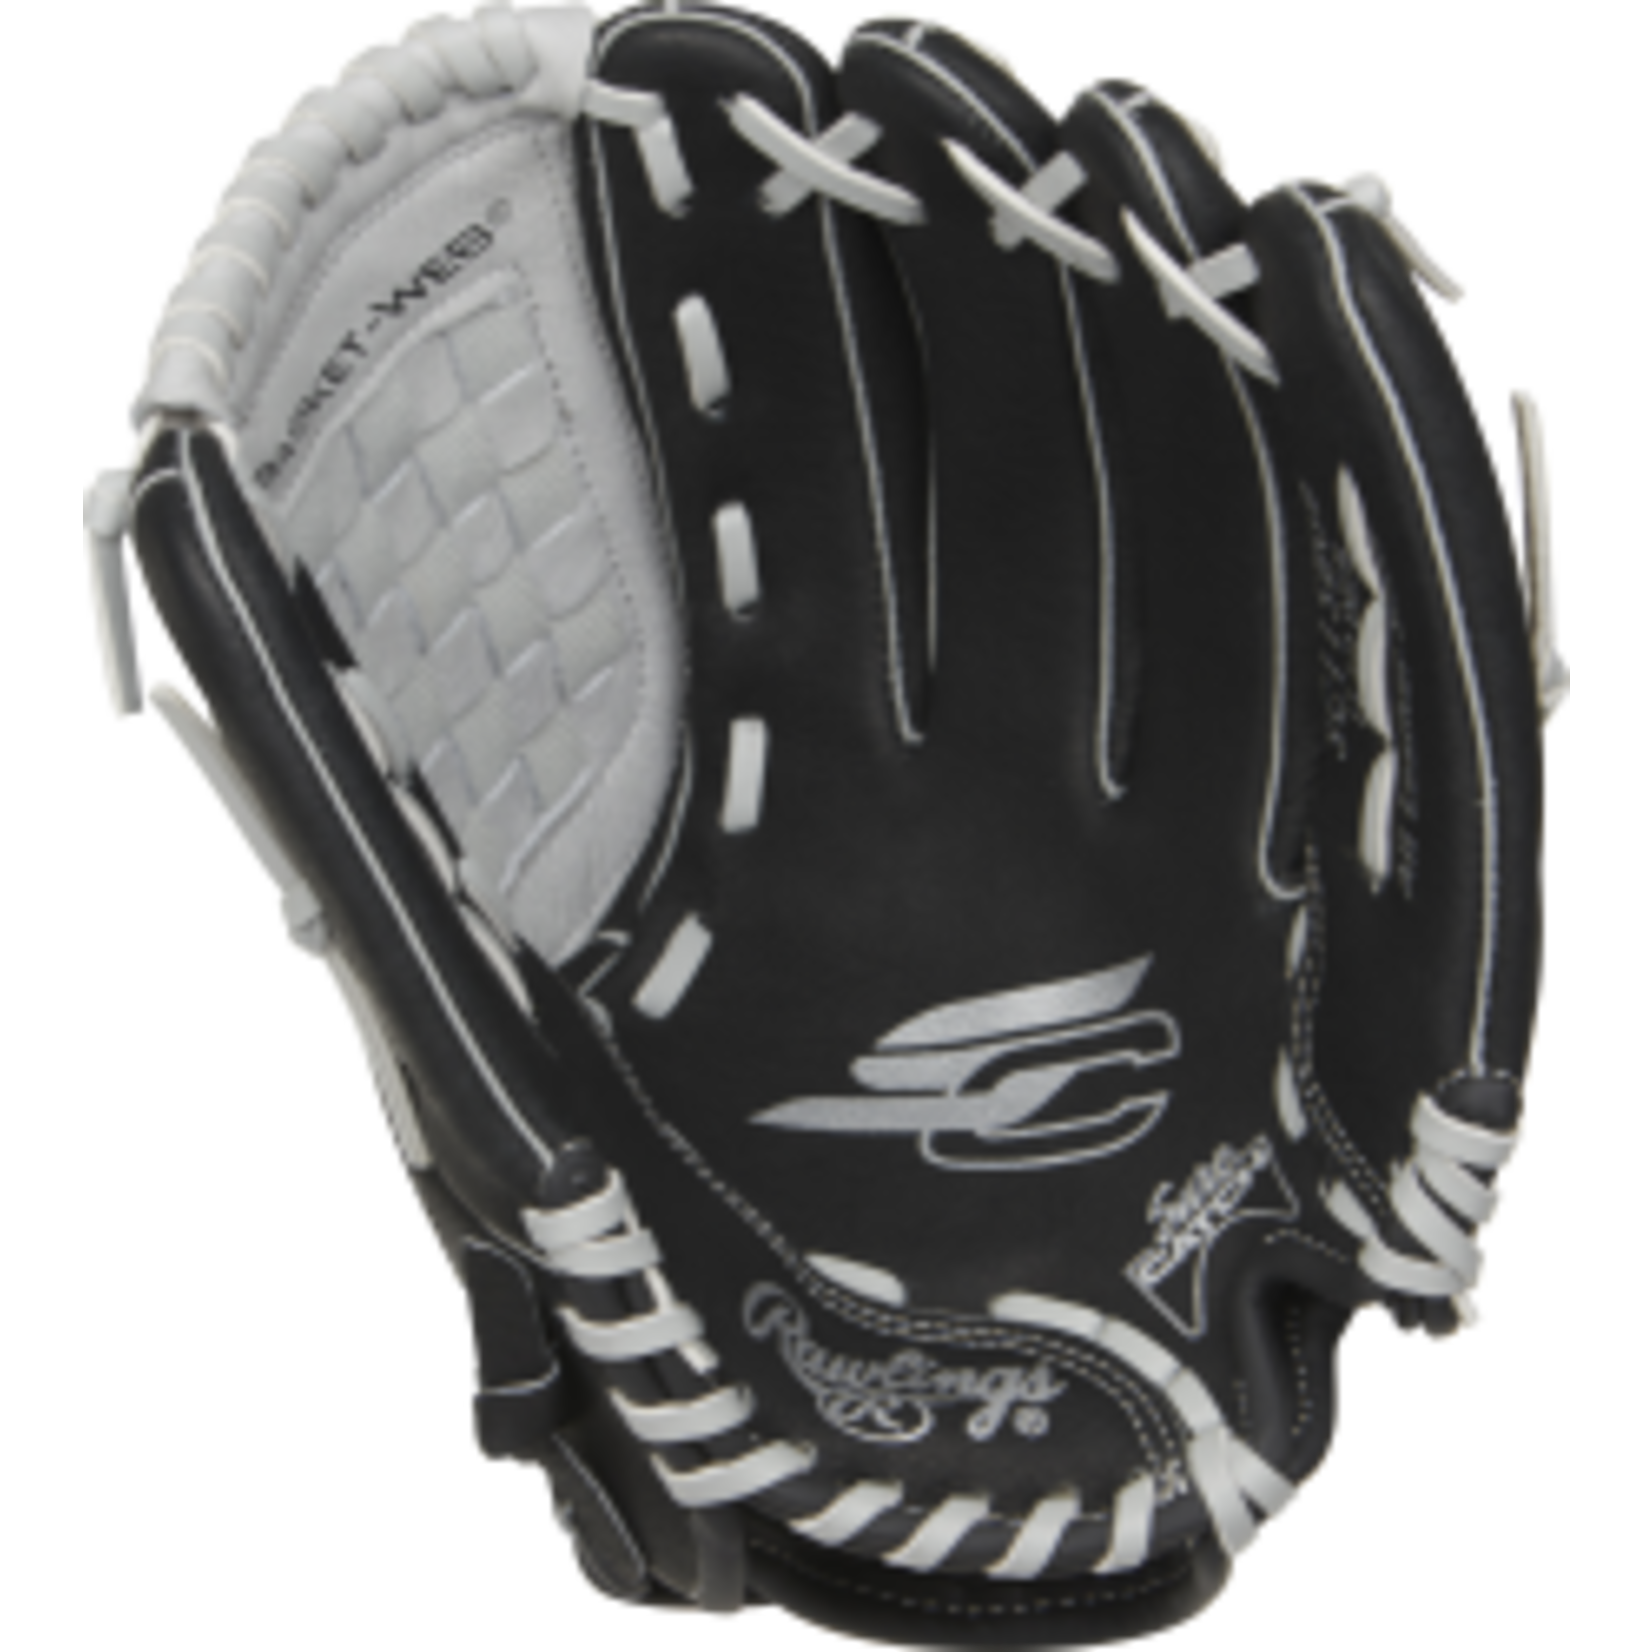 Rawlings Sure Catch 11.5in Baseball Glove